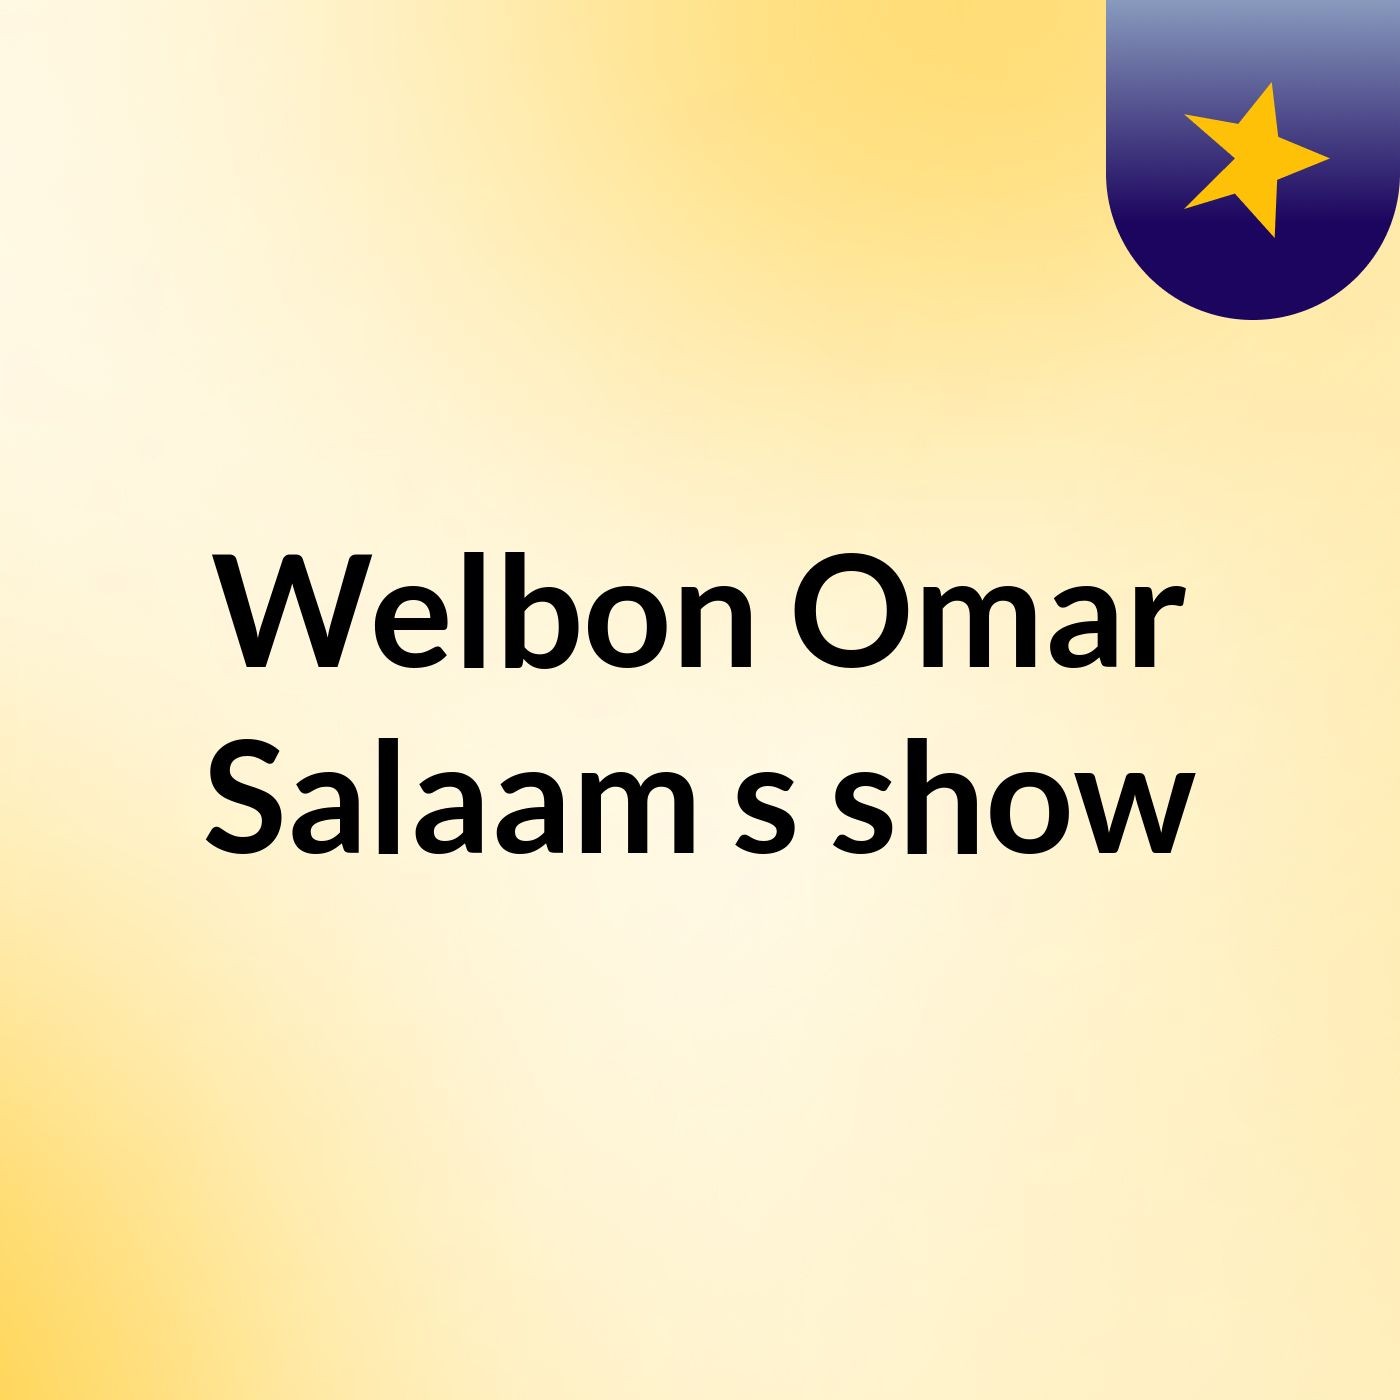 Welbon Omar Salaam's show